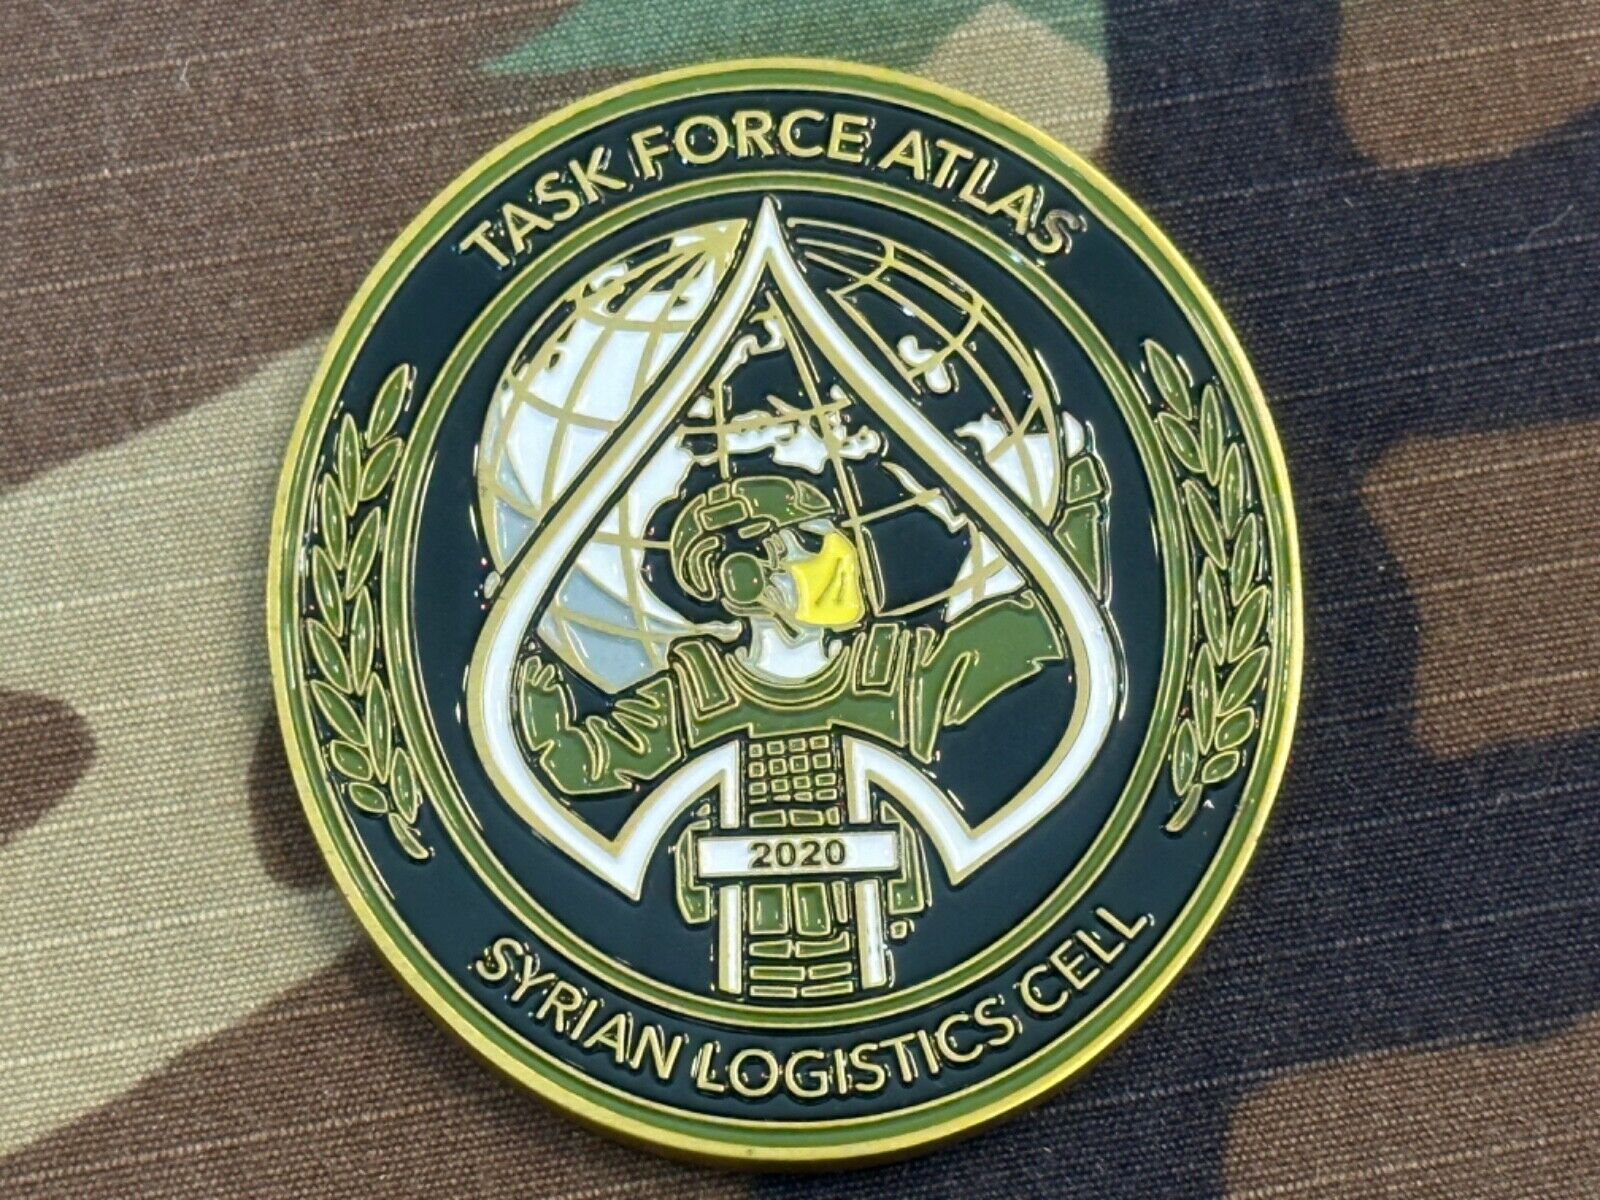 Task Force ATLAS Syrian Logistics Cell CJTF-SOJTF-OIR Camp Legion Challenge Coin